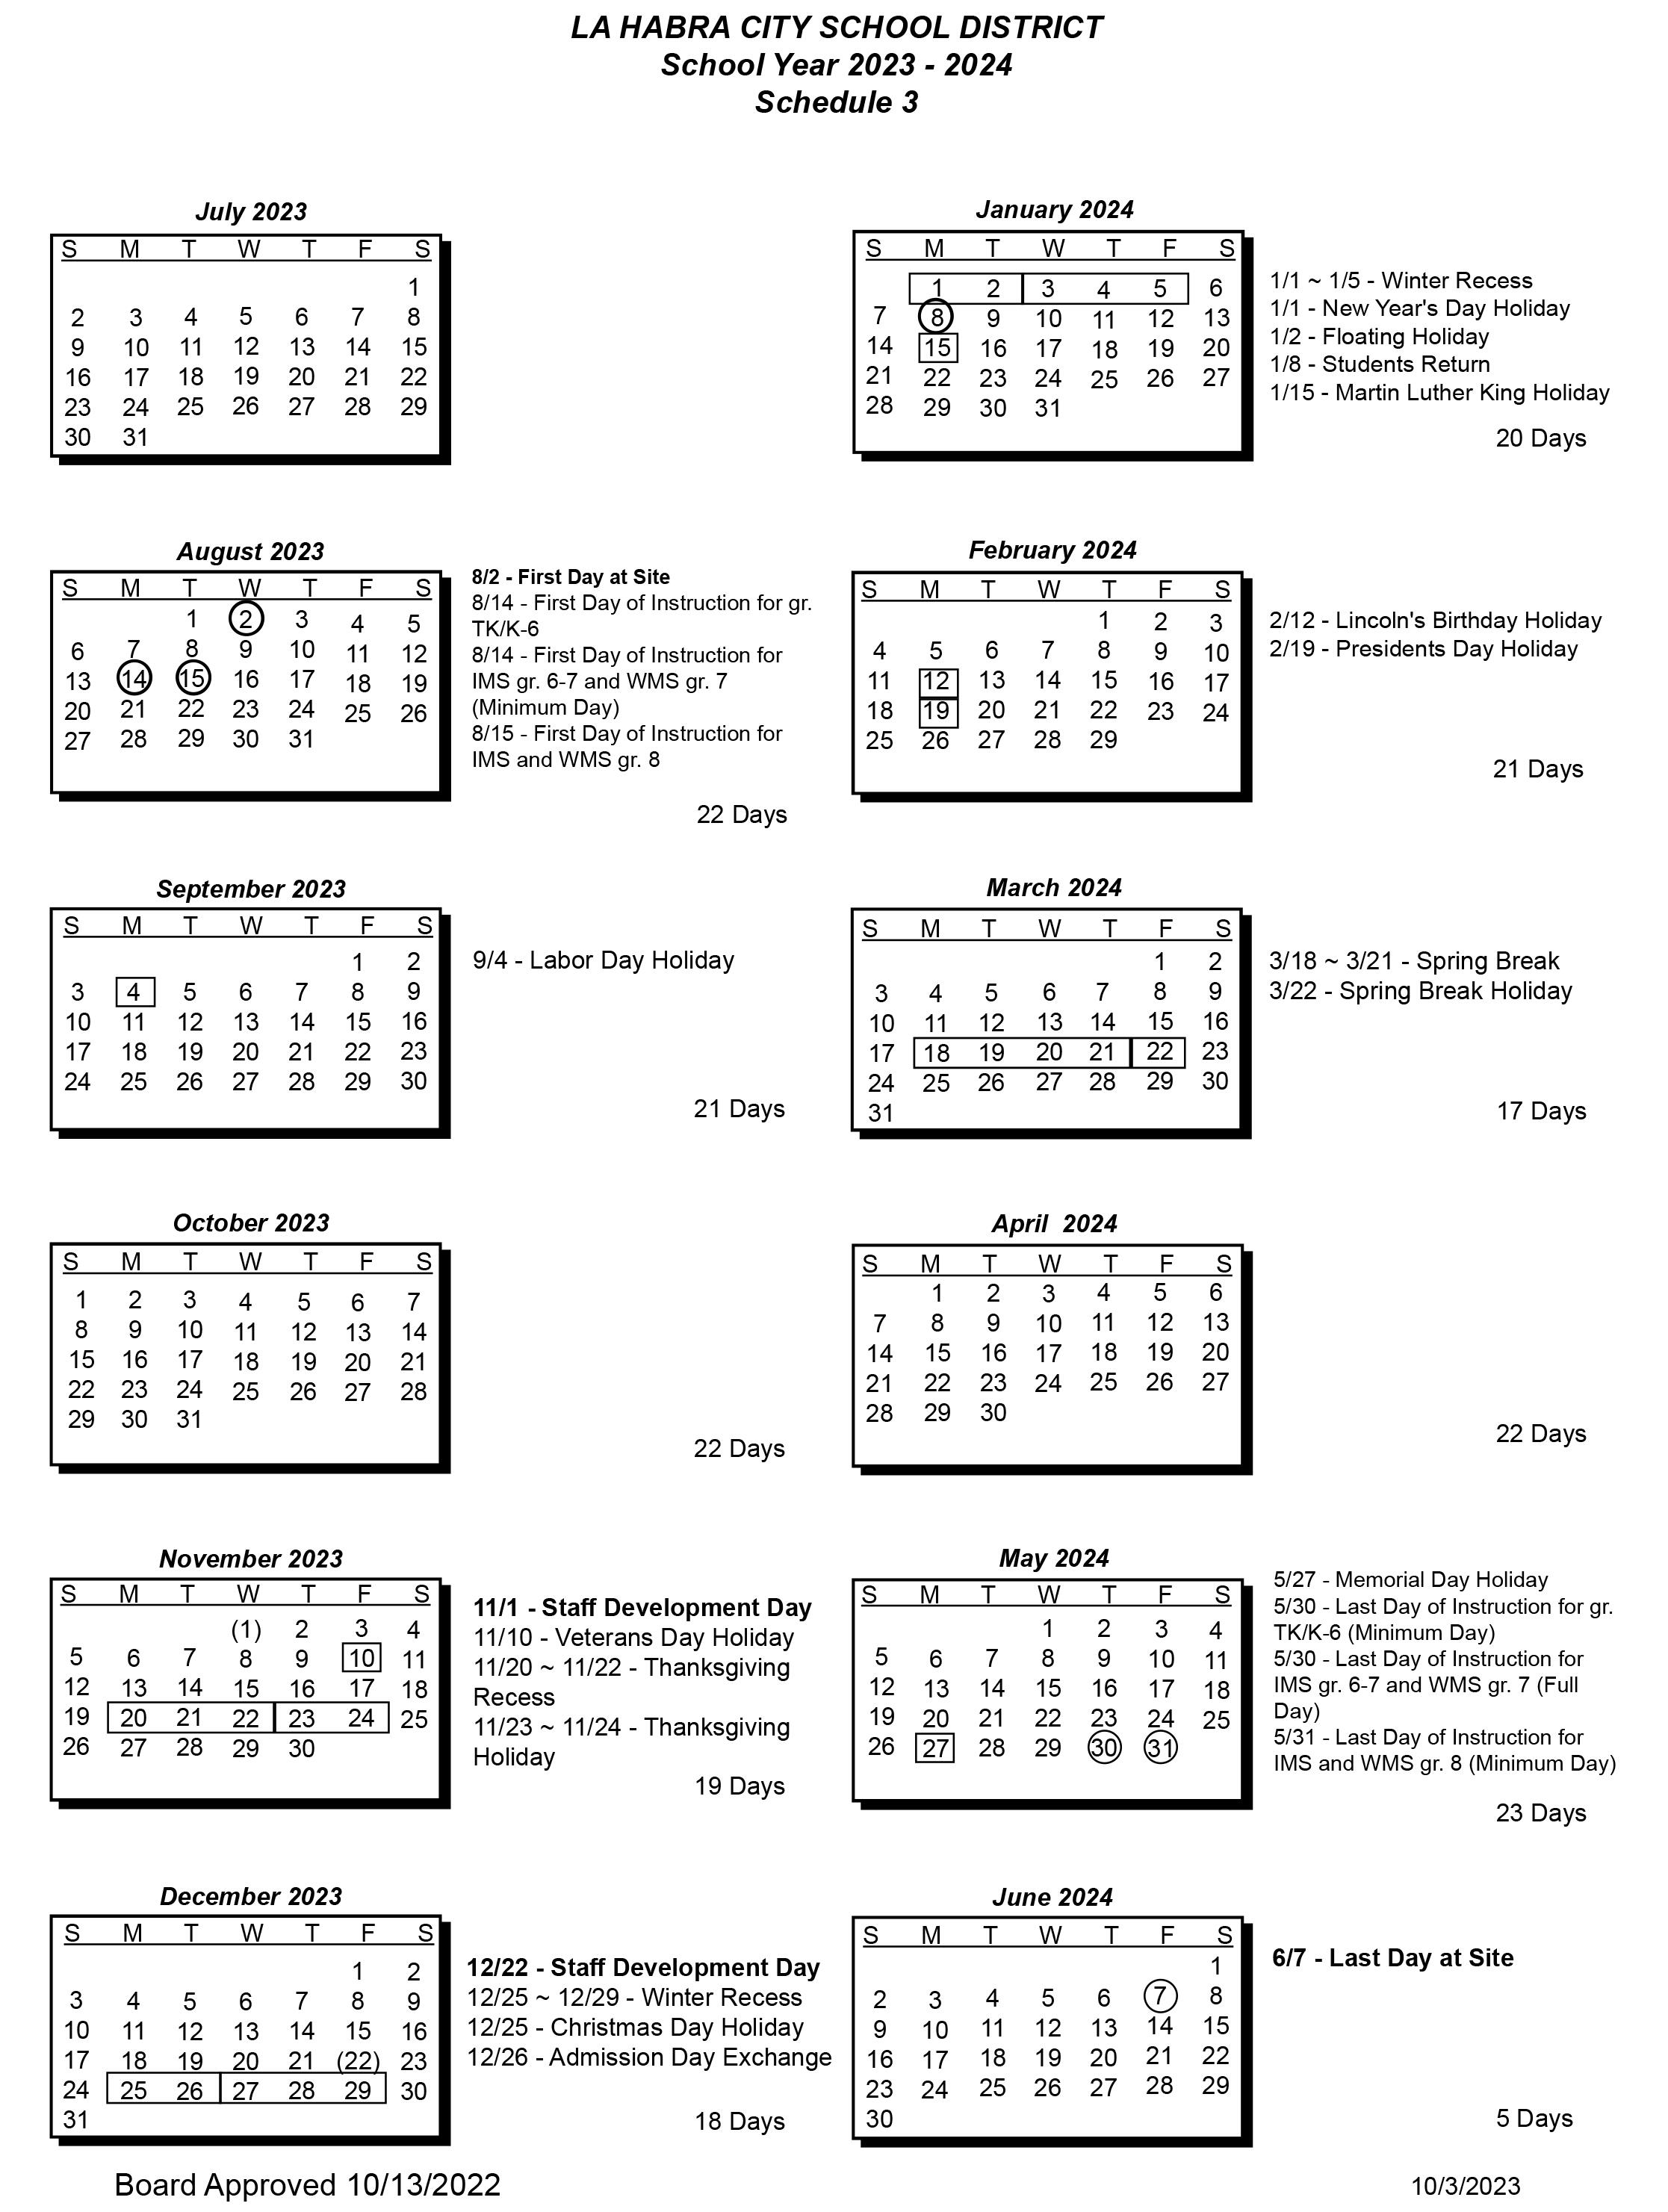 School Year Calendar Schedule 3